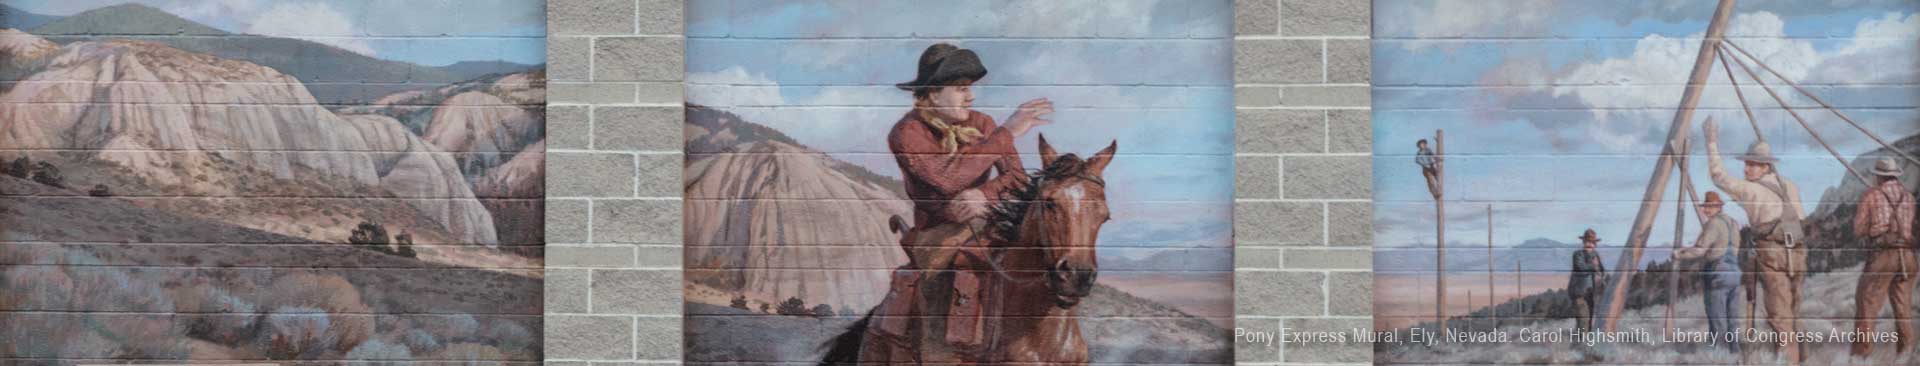 Pony Express Mural, Ely, Nevada